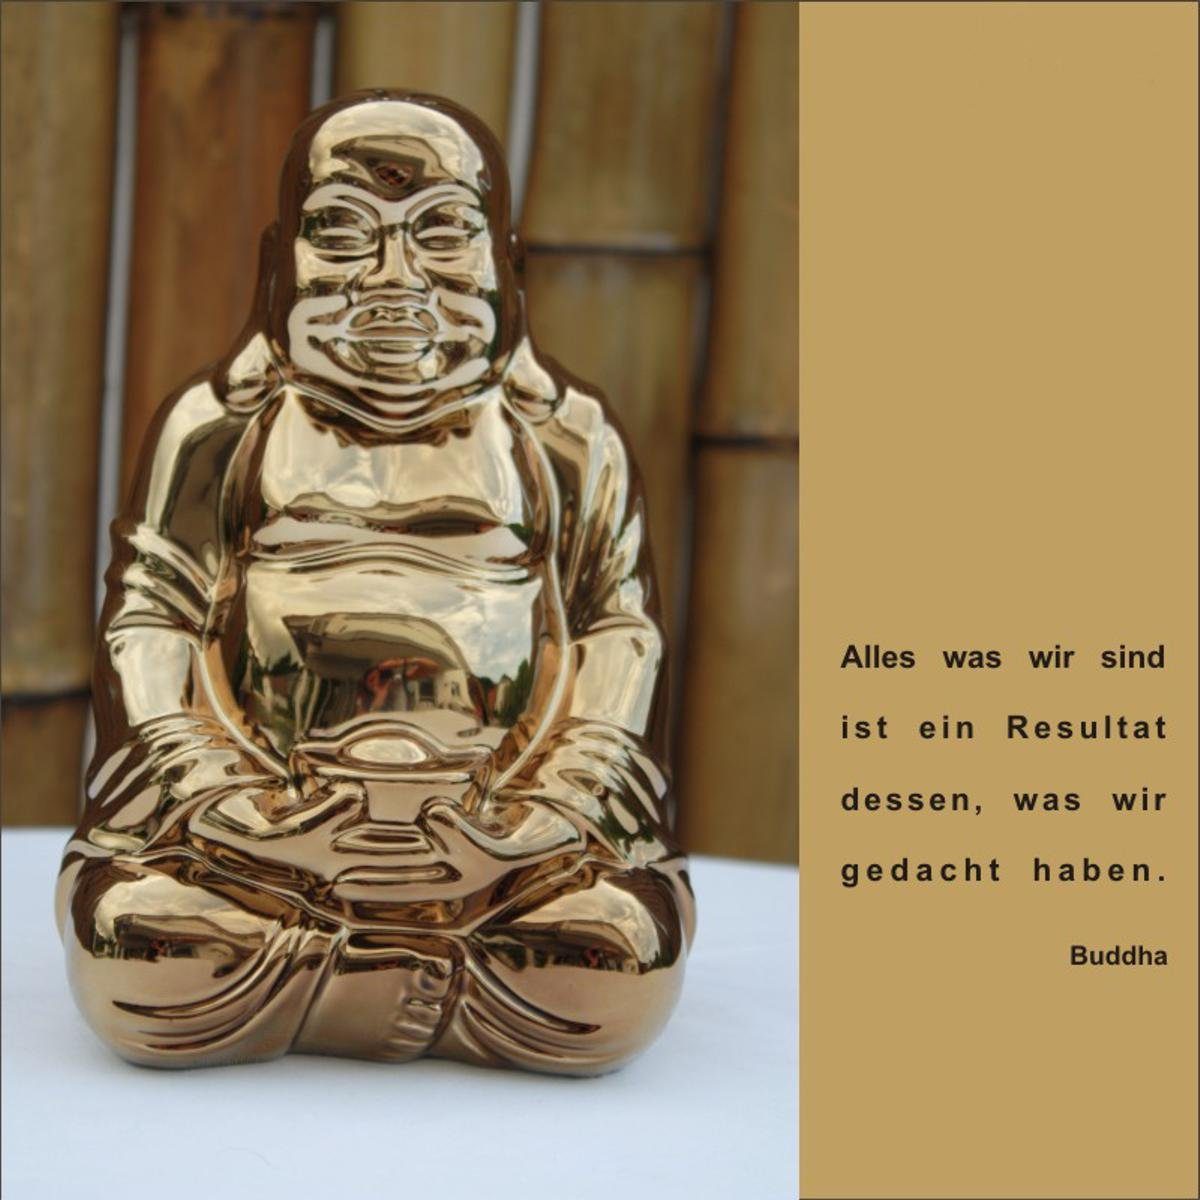 440s ca. cm 440s Buddhafigur bronzefarben Keramik BUDDHA glänzend 20 H